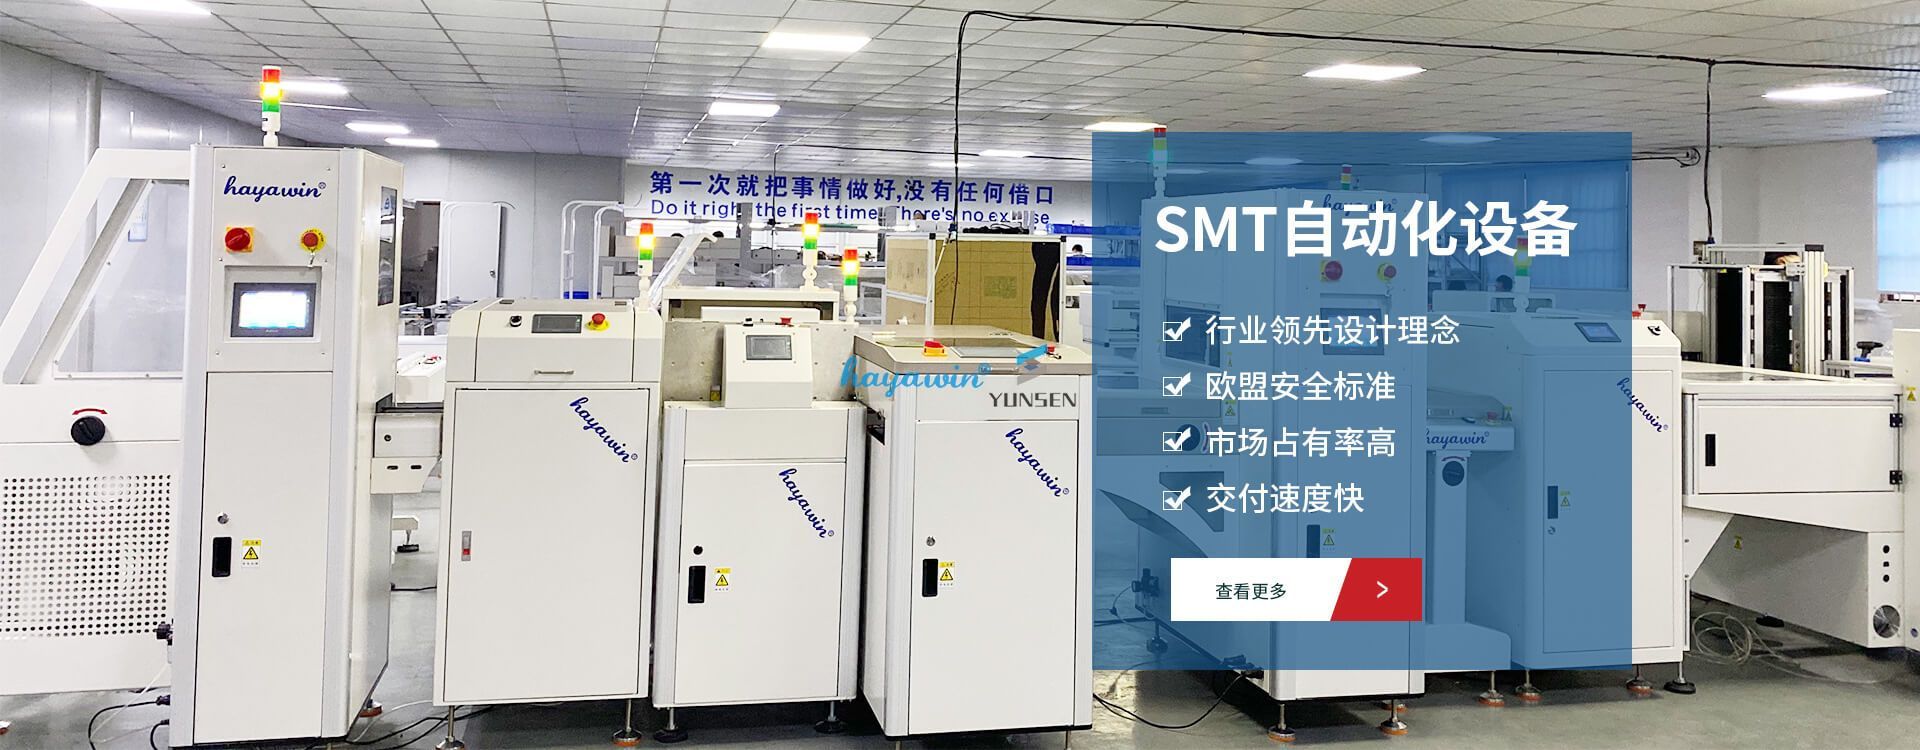 SMT Manufacturing